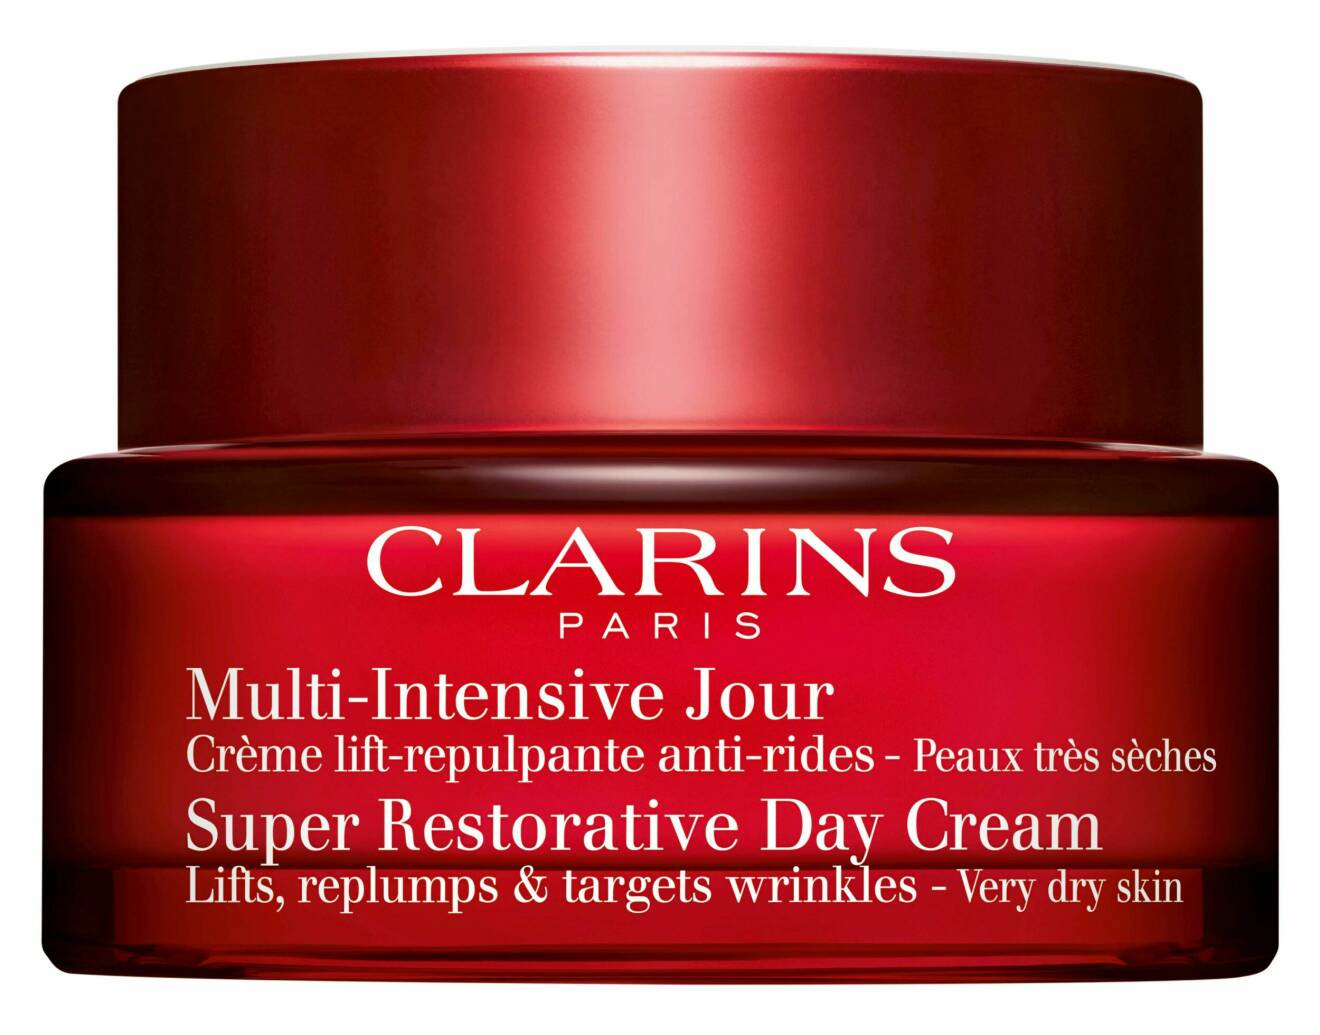 Super Restorative Day Cream från Clarins.